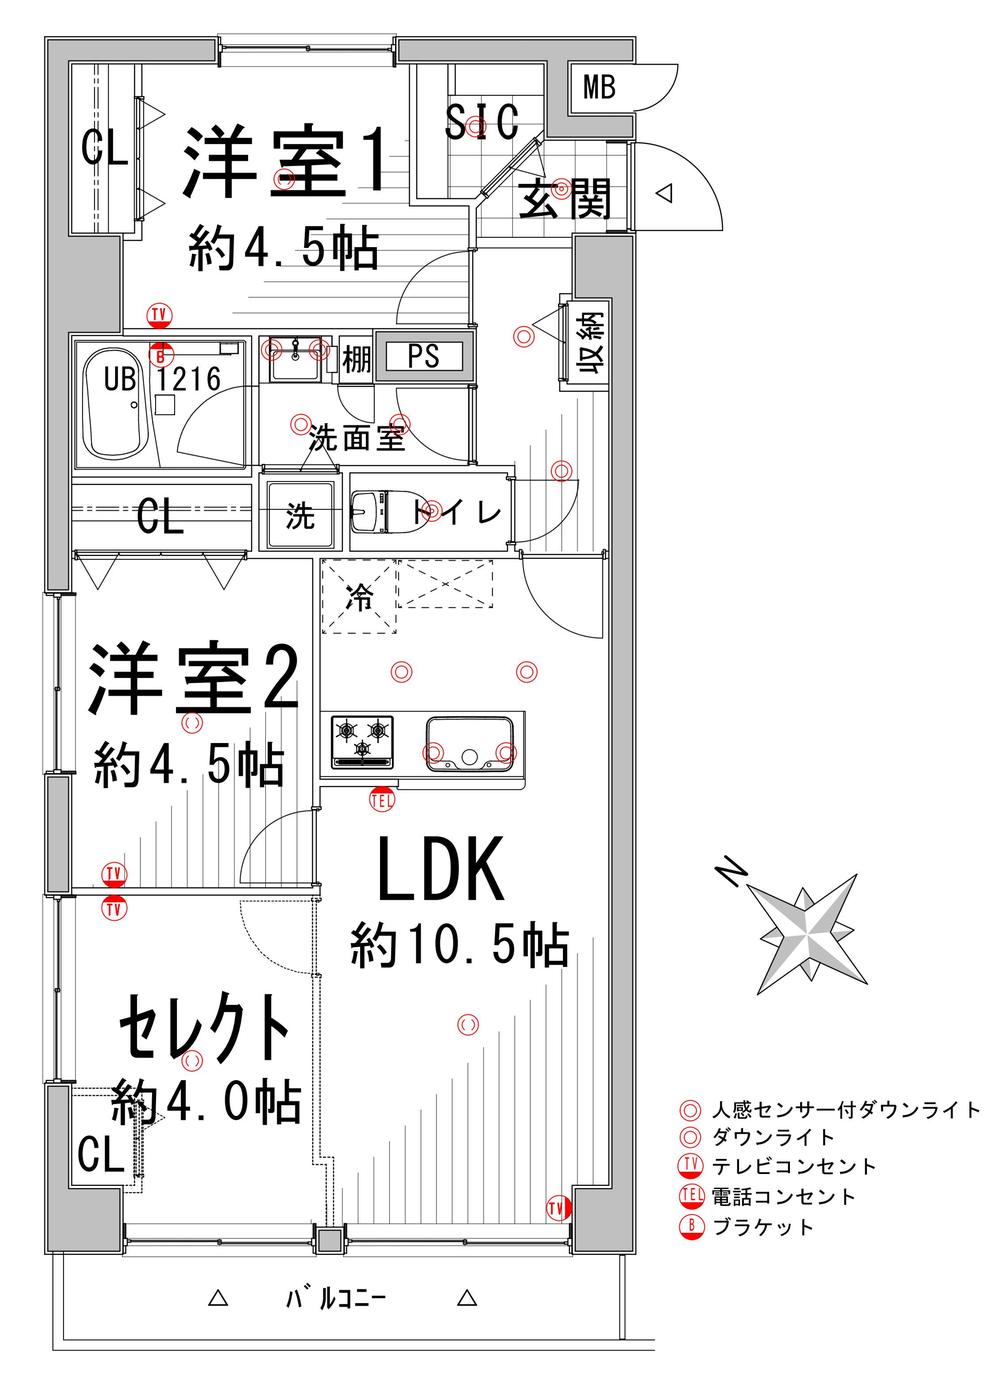 Floor plan. 3LDK, Price 14.7 million yen, Occupied area 61.56 sq m , Floor select possible on the balcony area 5.4 sq m Free